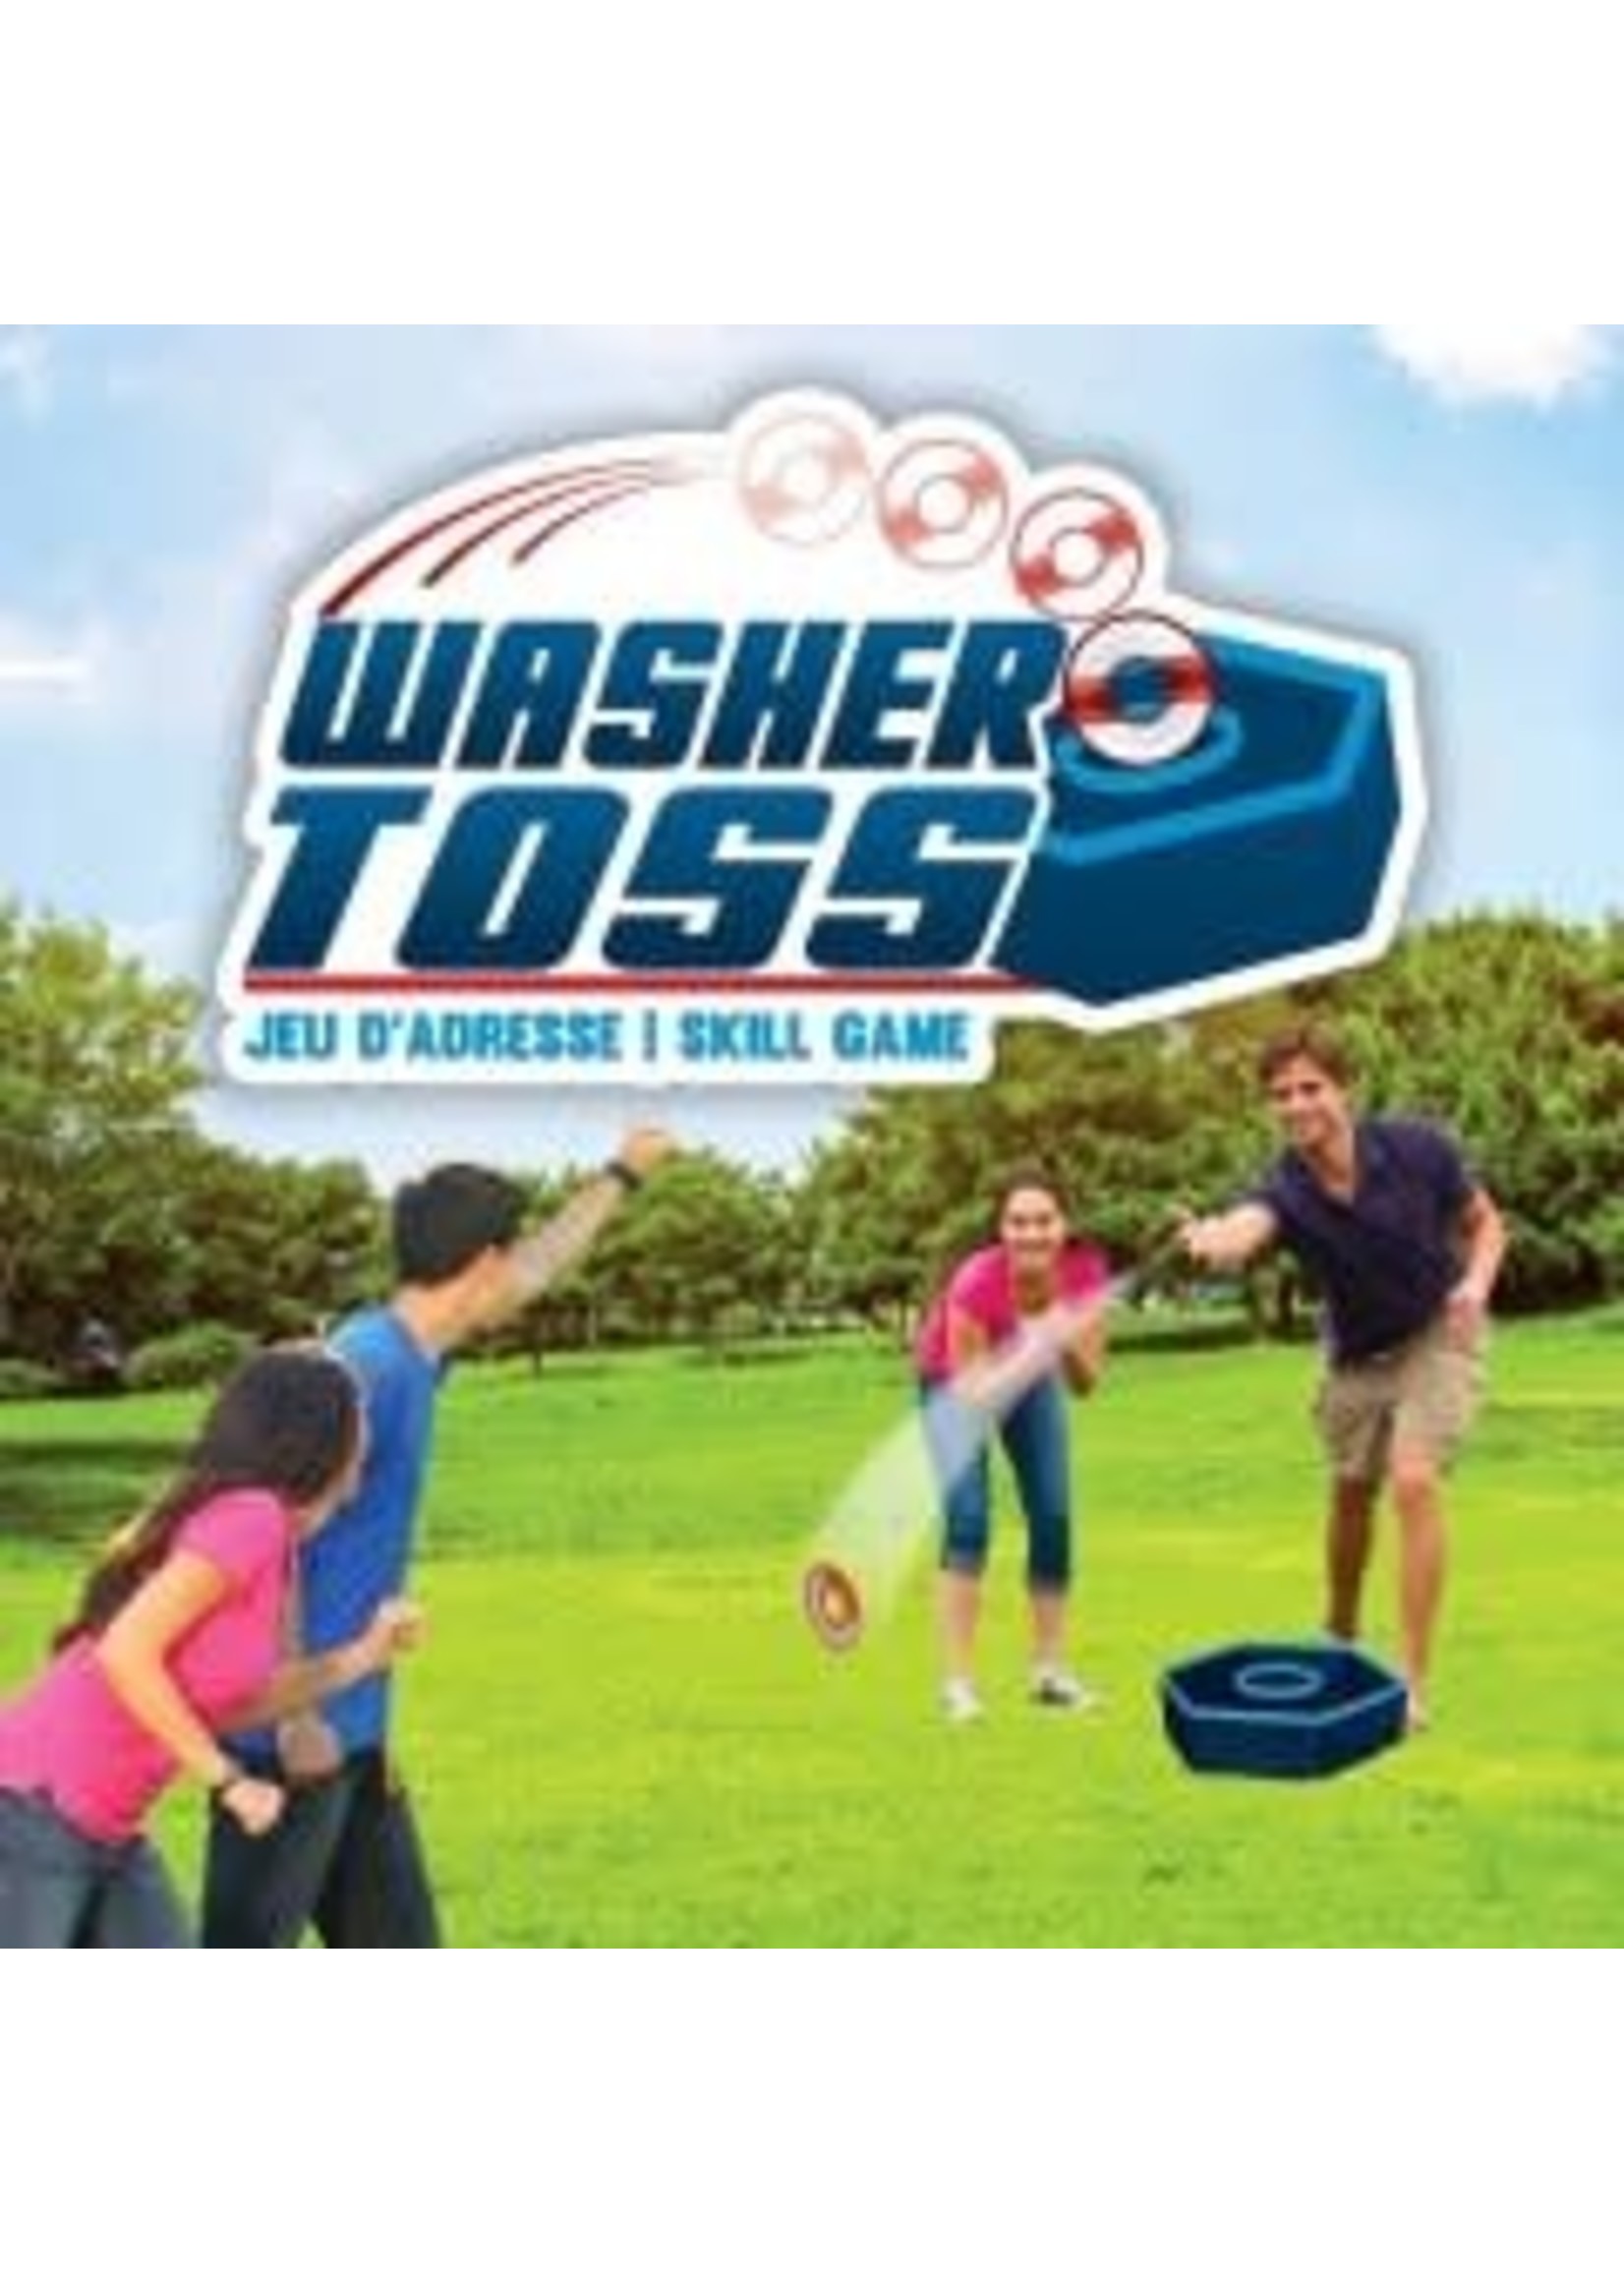 Ricochet Washer toss - skill game